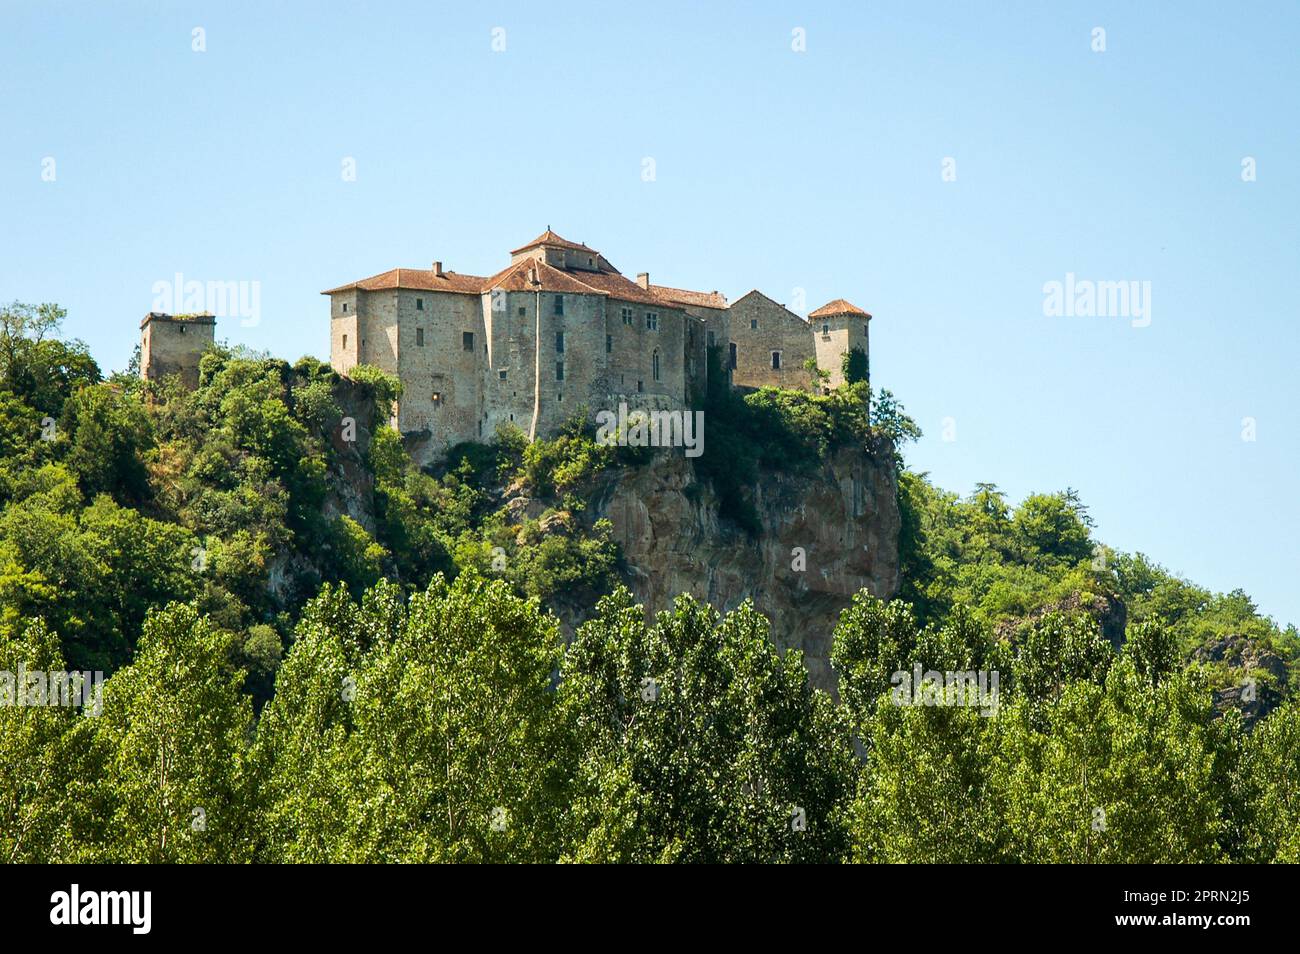 Castels of Bruniquel village, on a rocky promontory Stock Photo